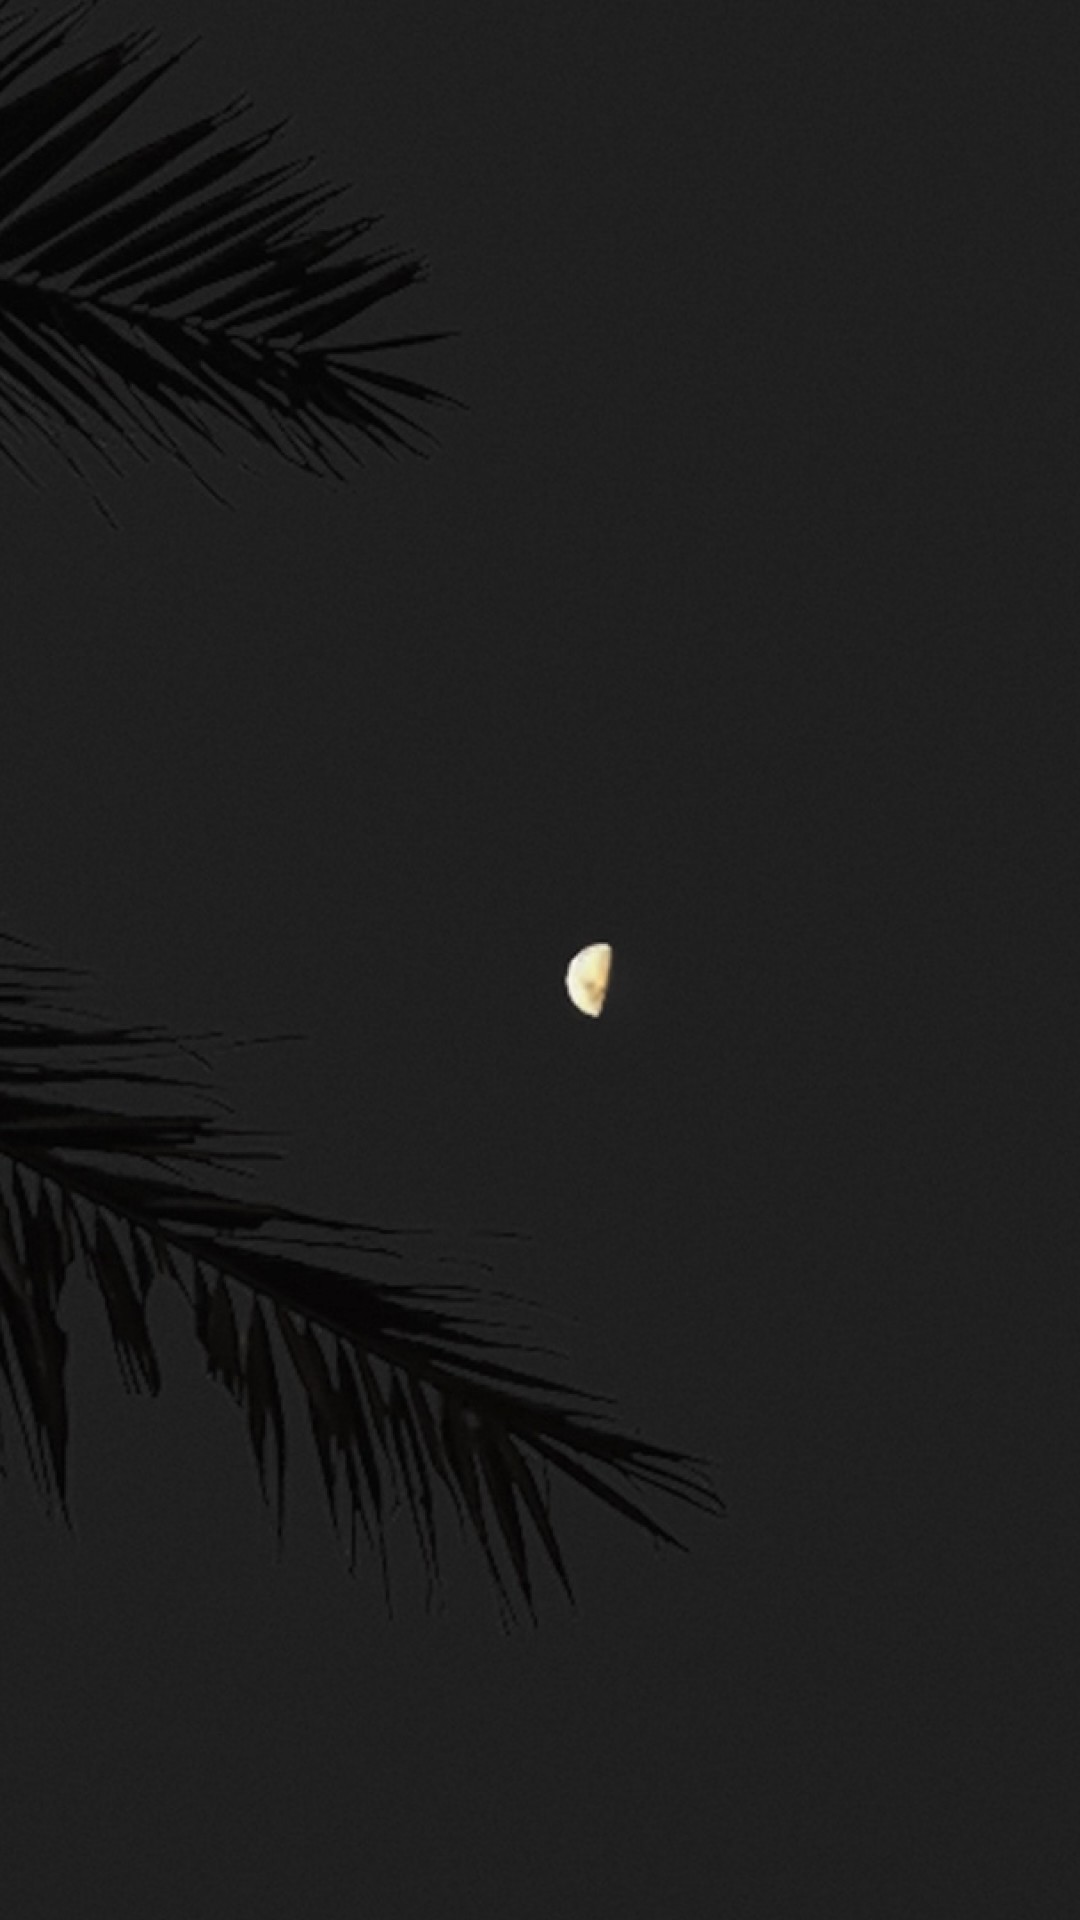 Full moon over tropical trees HD Wallpaper